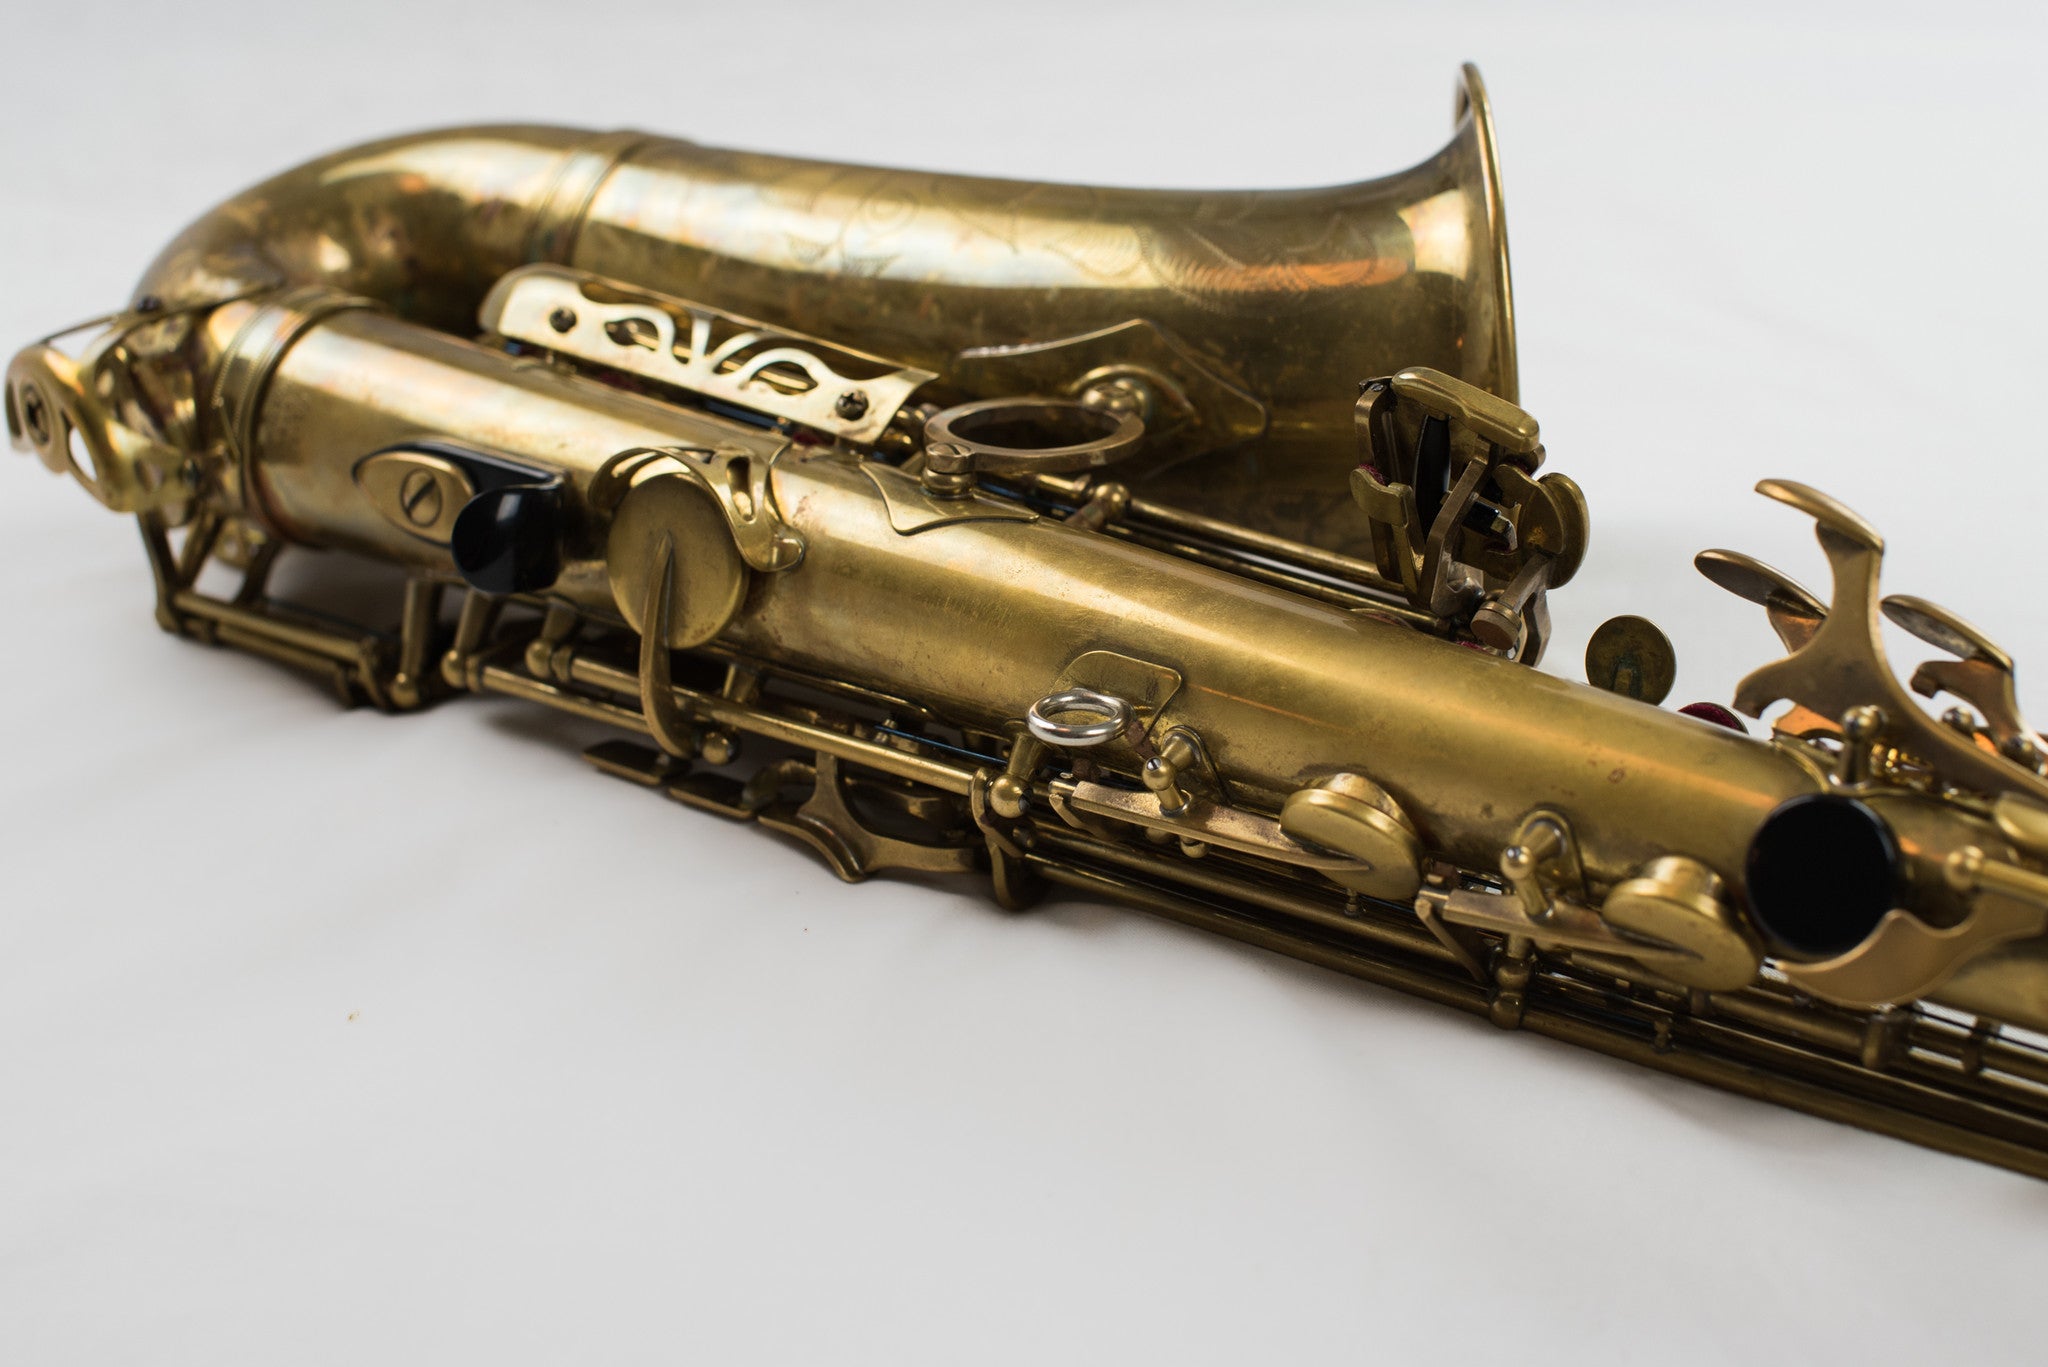 Yamaha Custom 82Z Alto Saxophone, Unlacquered